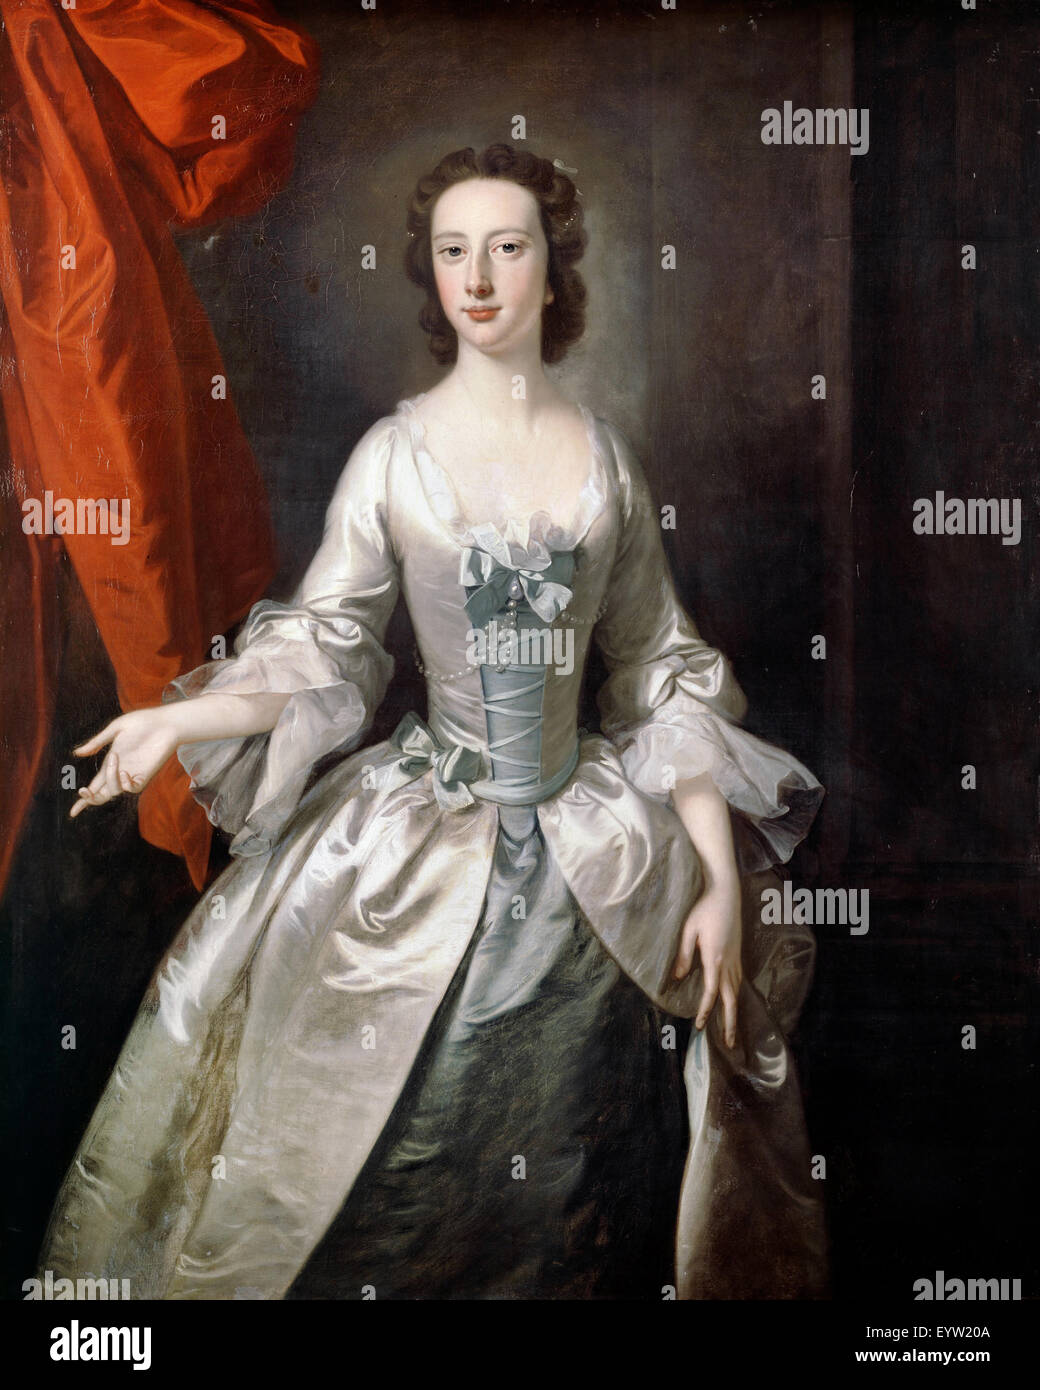 Thomas Hudson, Portrait einer Dame 1750-Öl auf Leinwand. Dulwich Picture Gallery, London, England. Stockfoto